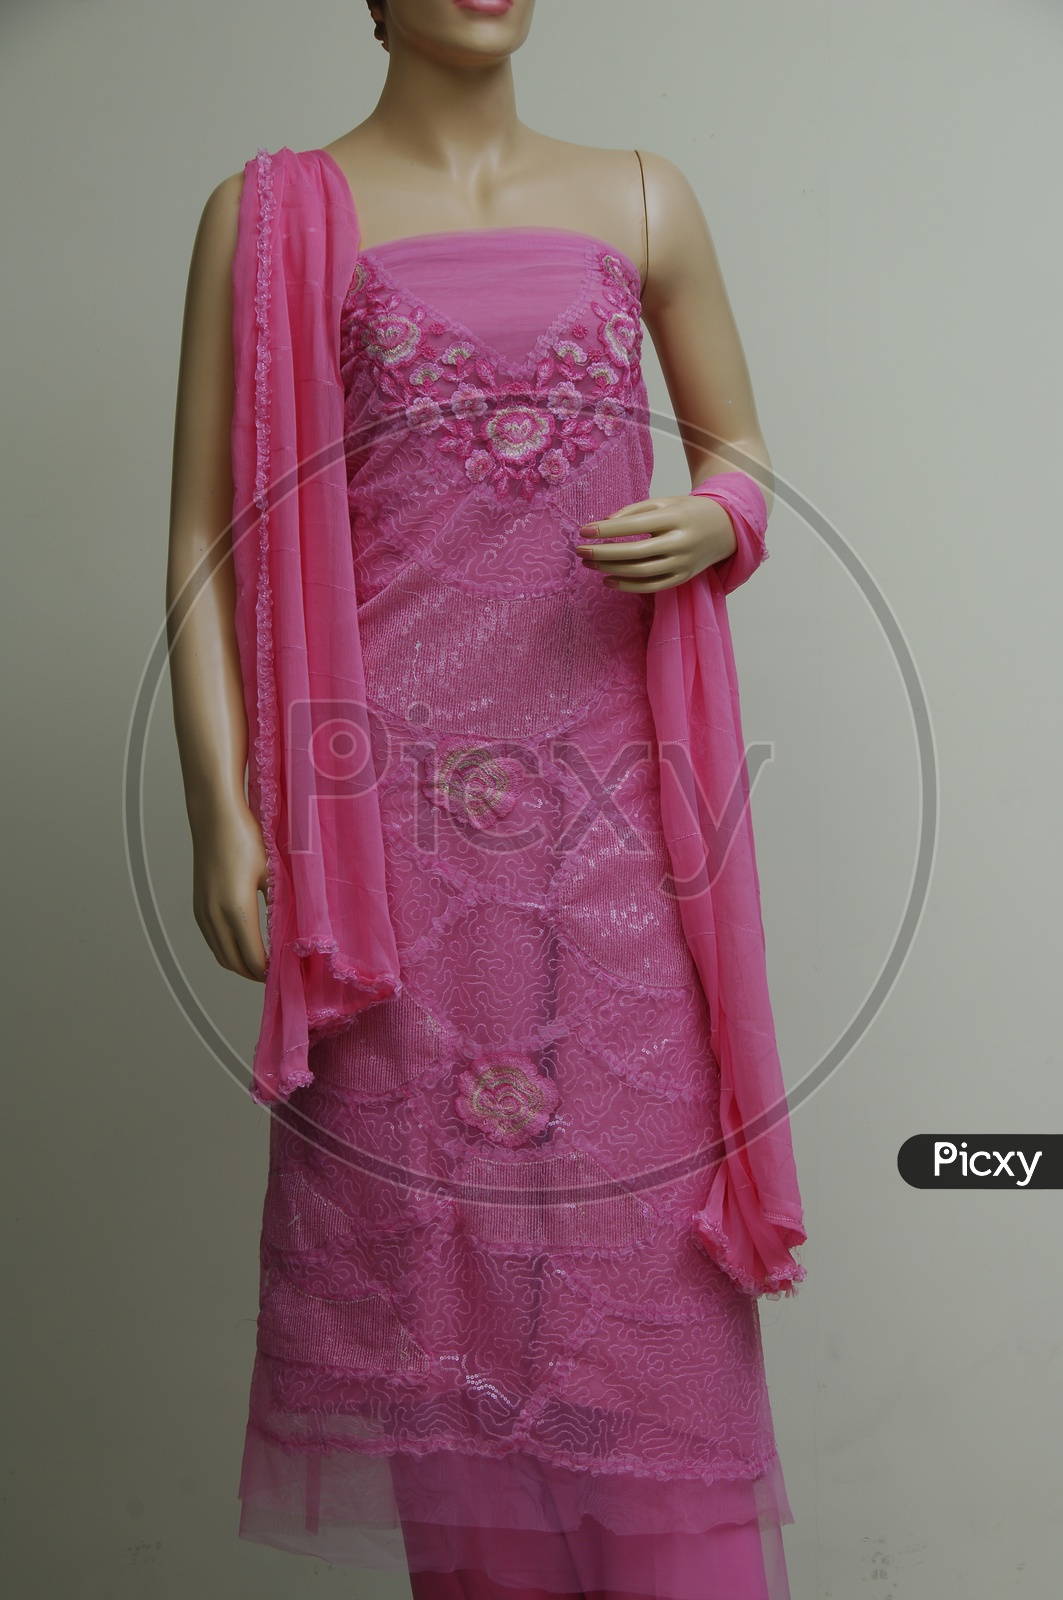 Photograph of Pink chudidhar dress